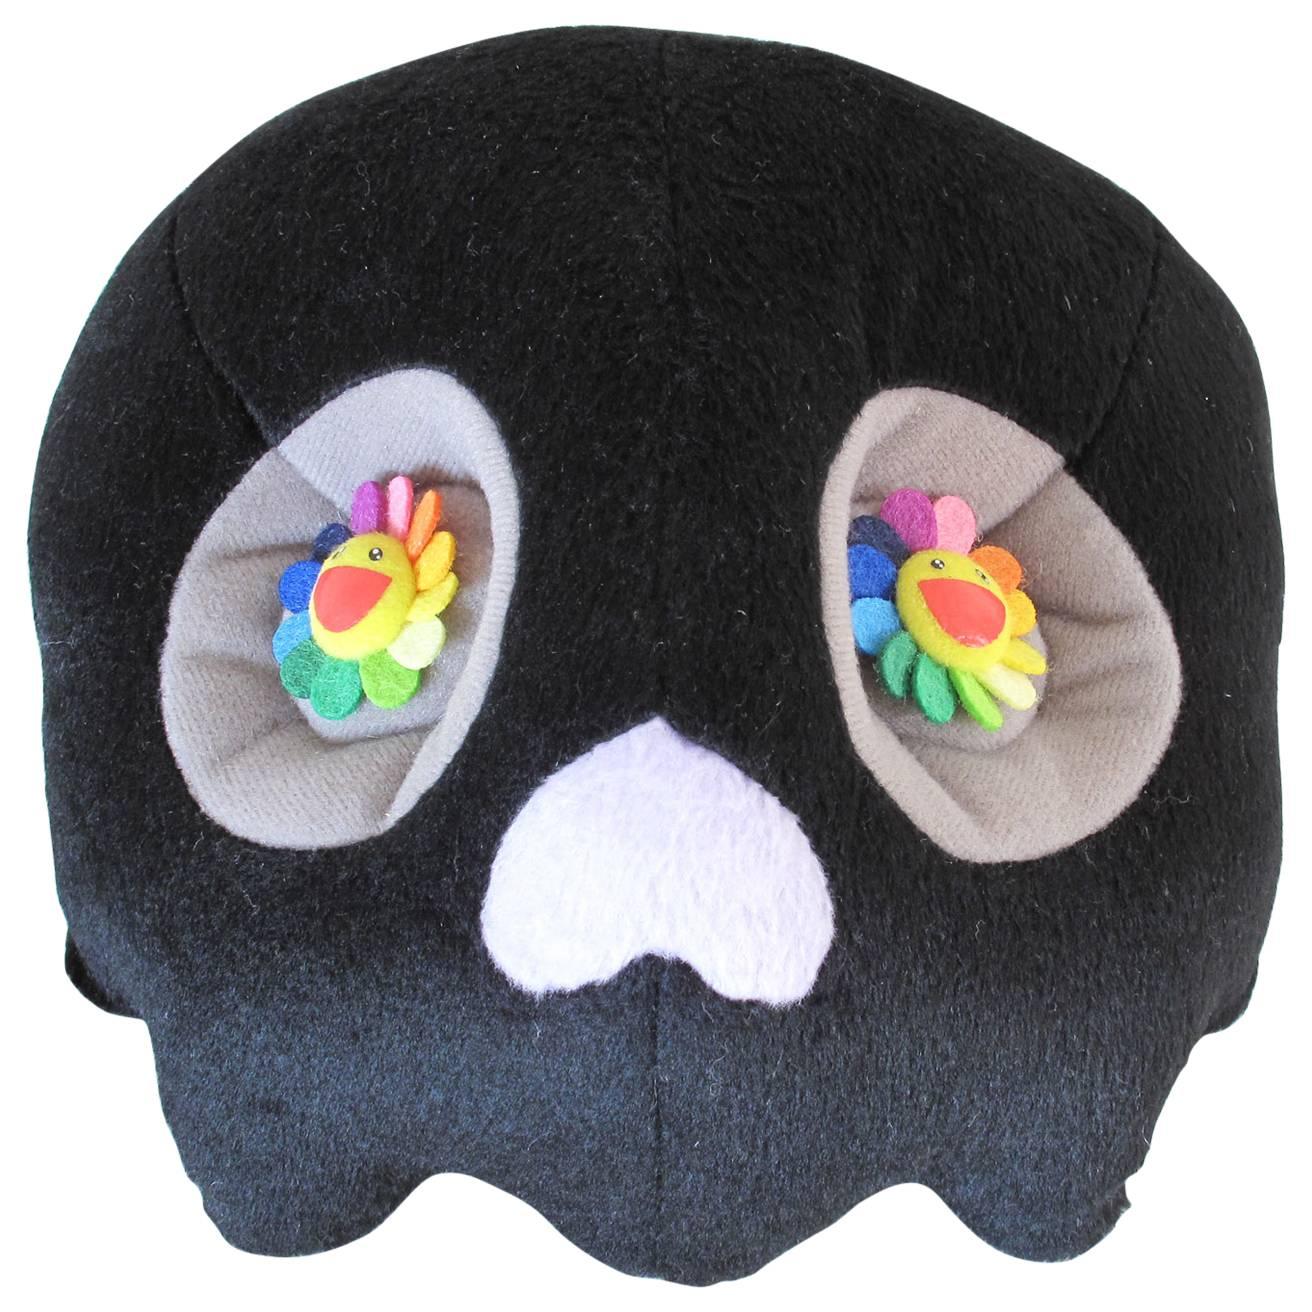 Takashi Murakami Soft Black Skull Sculpture, 2007 For Sale